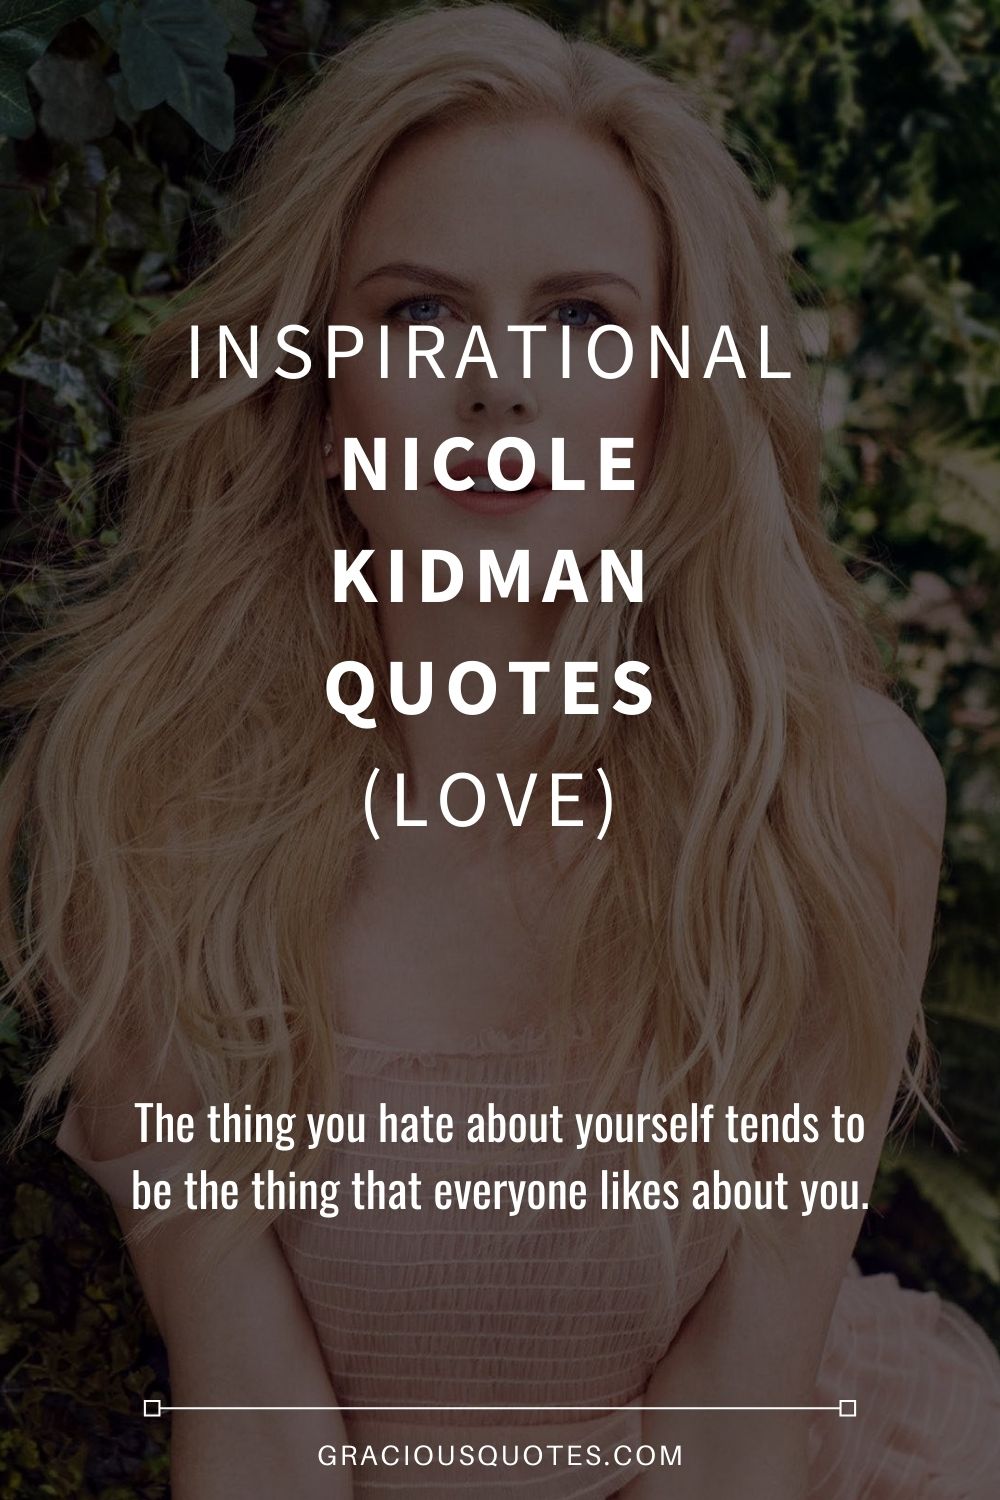 Inspirational Nicole Kidman Quotes (LOVE) - Gracious Quotes